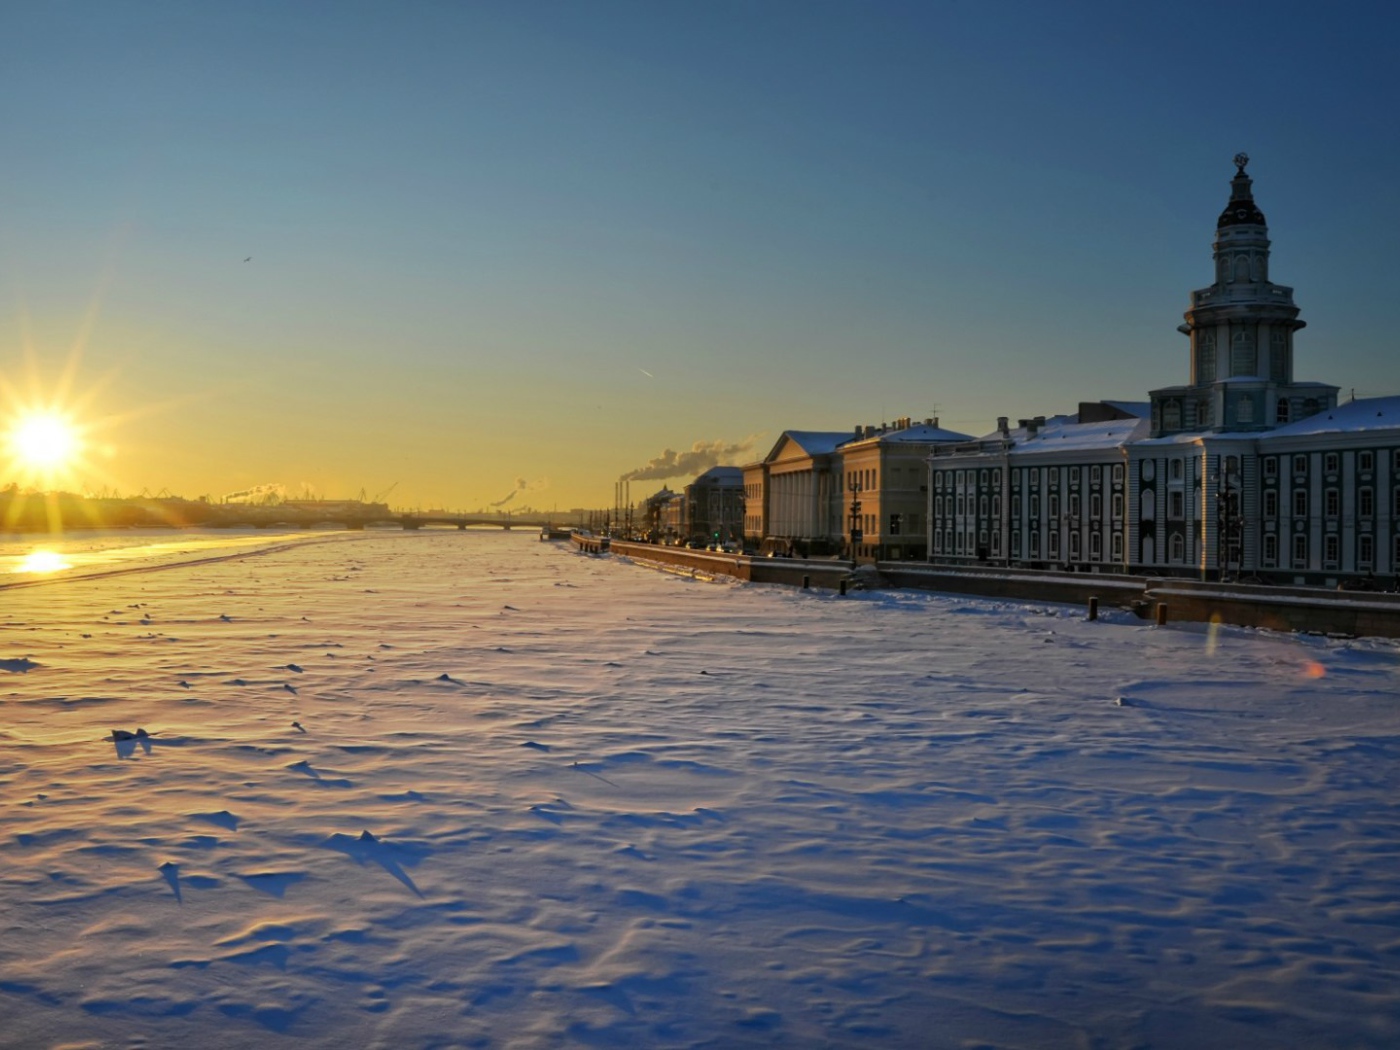 St. Petersburg - a beautiful city on the Neva